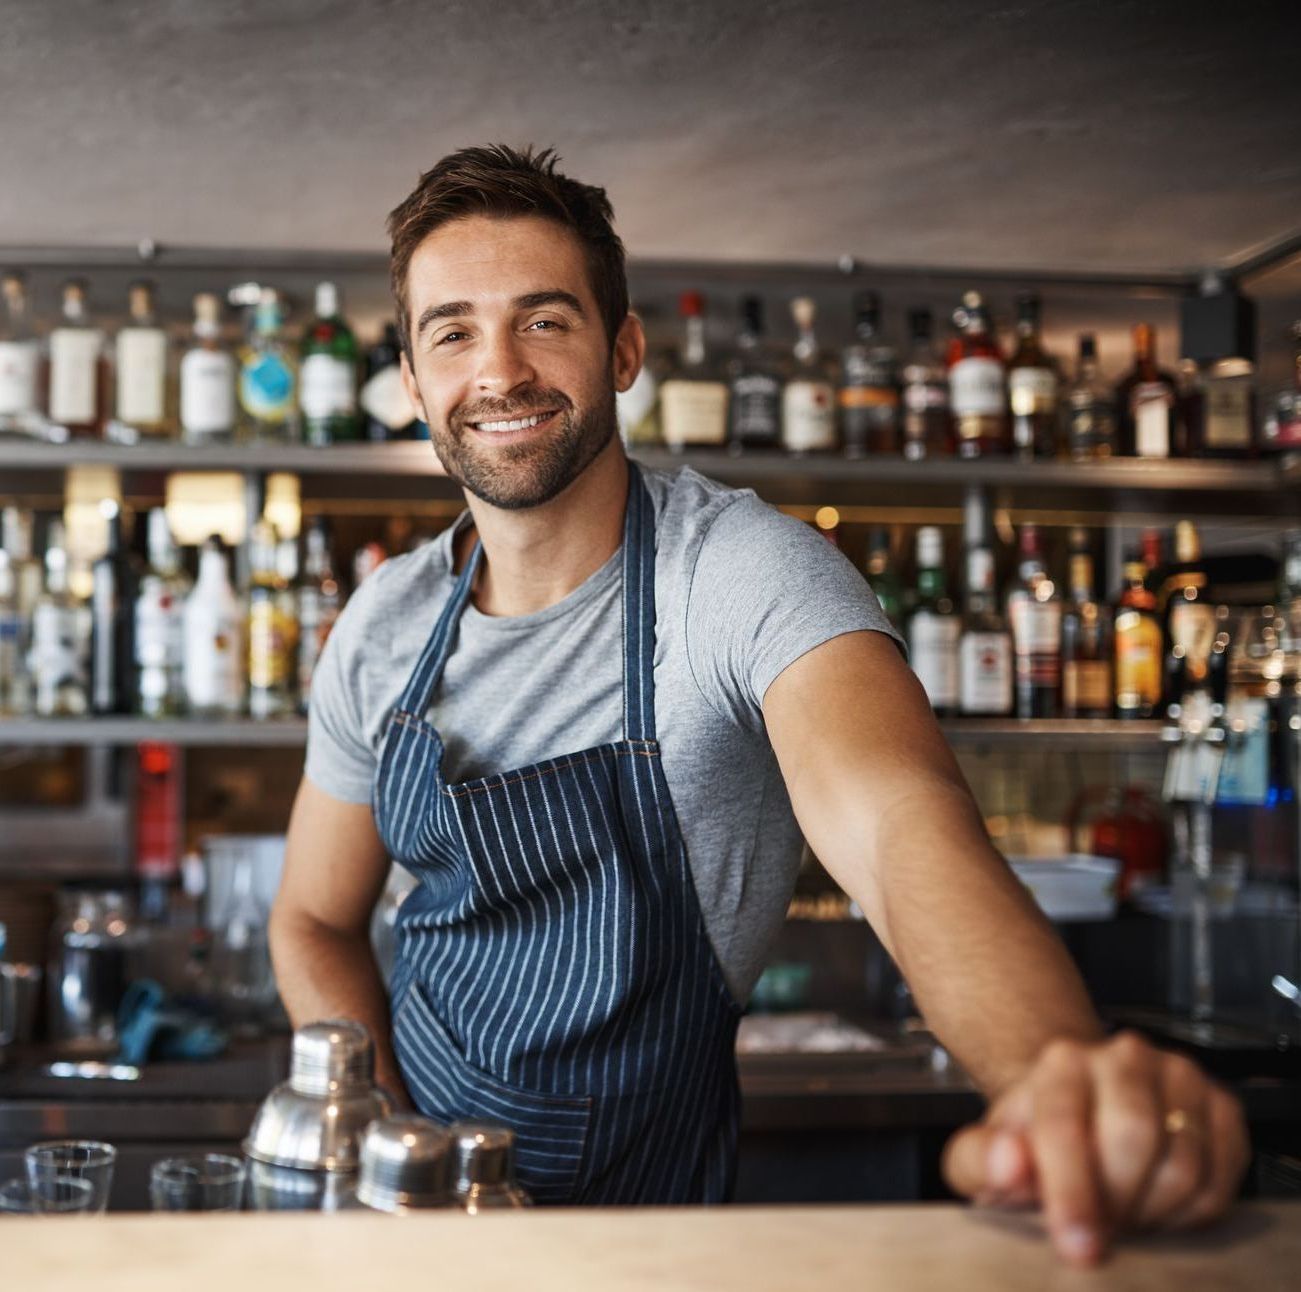 Man smiling behind a bar